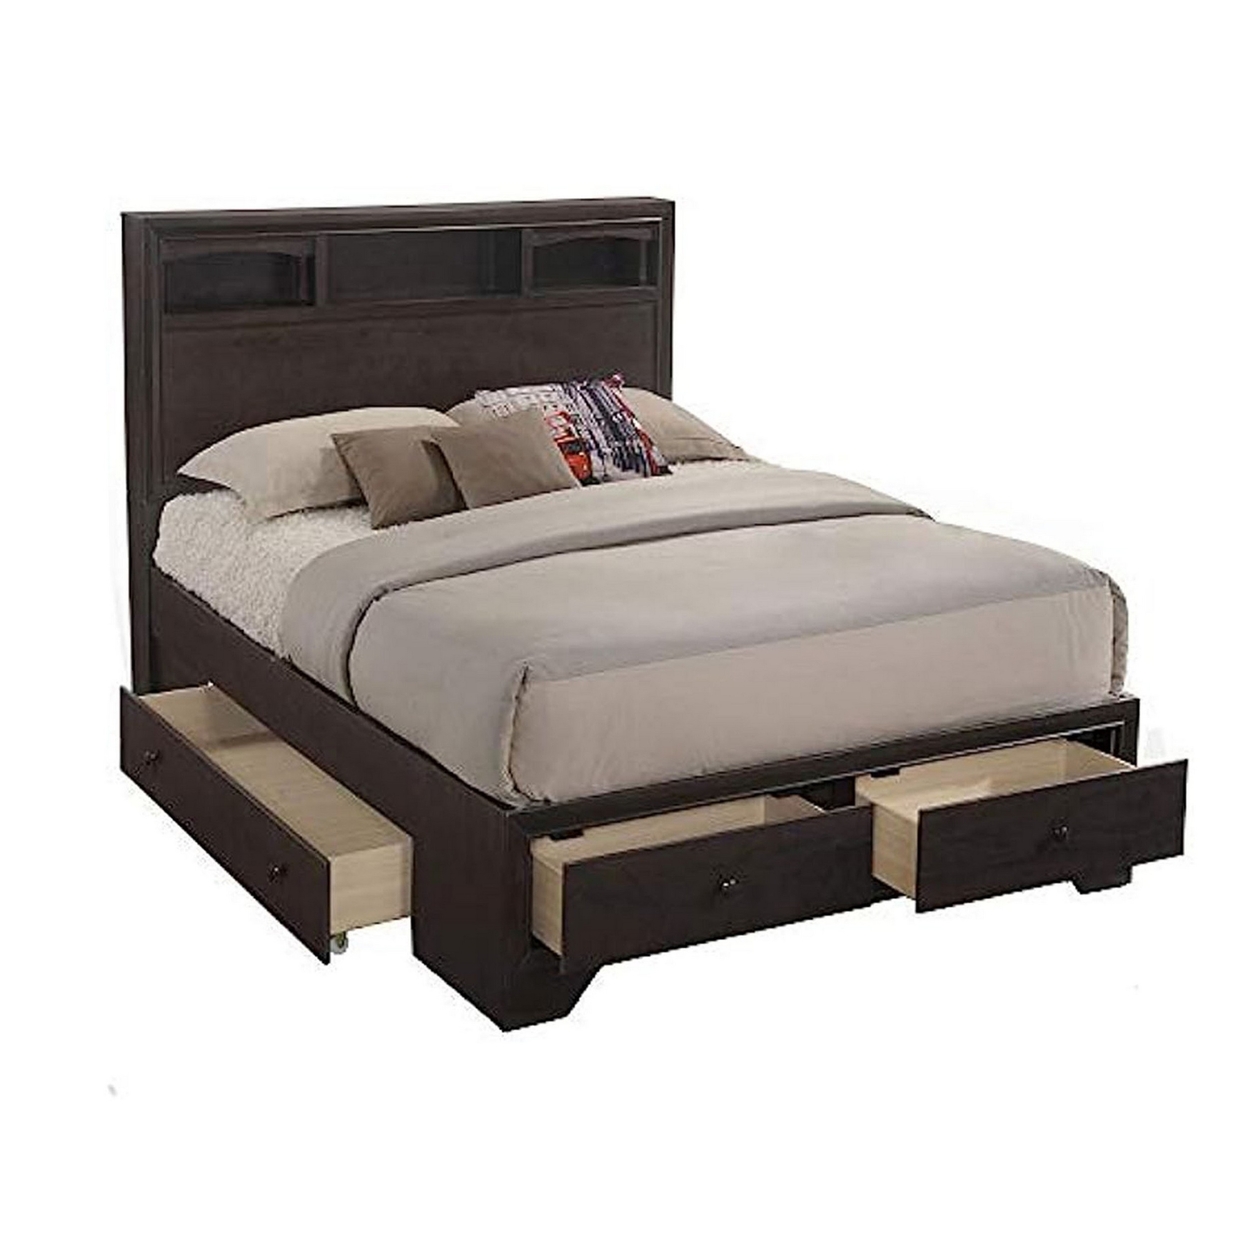 Queen Size Bed With 4 Storage Drawers, Bookcase Headboard, Walnut Brown- Saltoro Sherpi